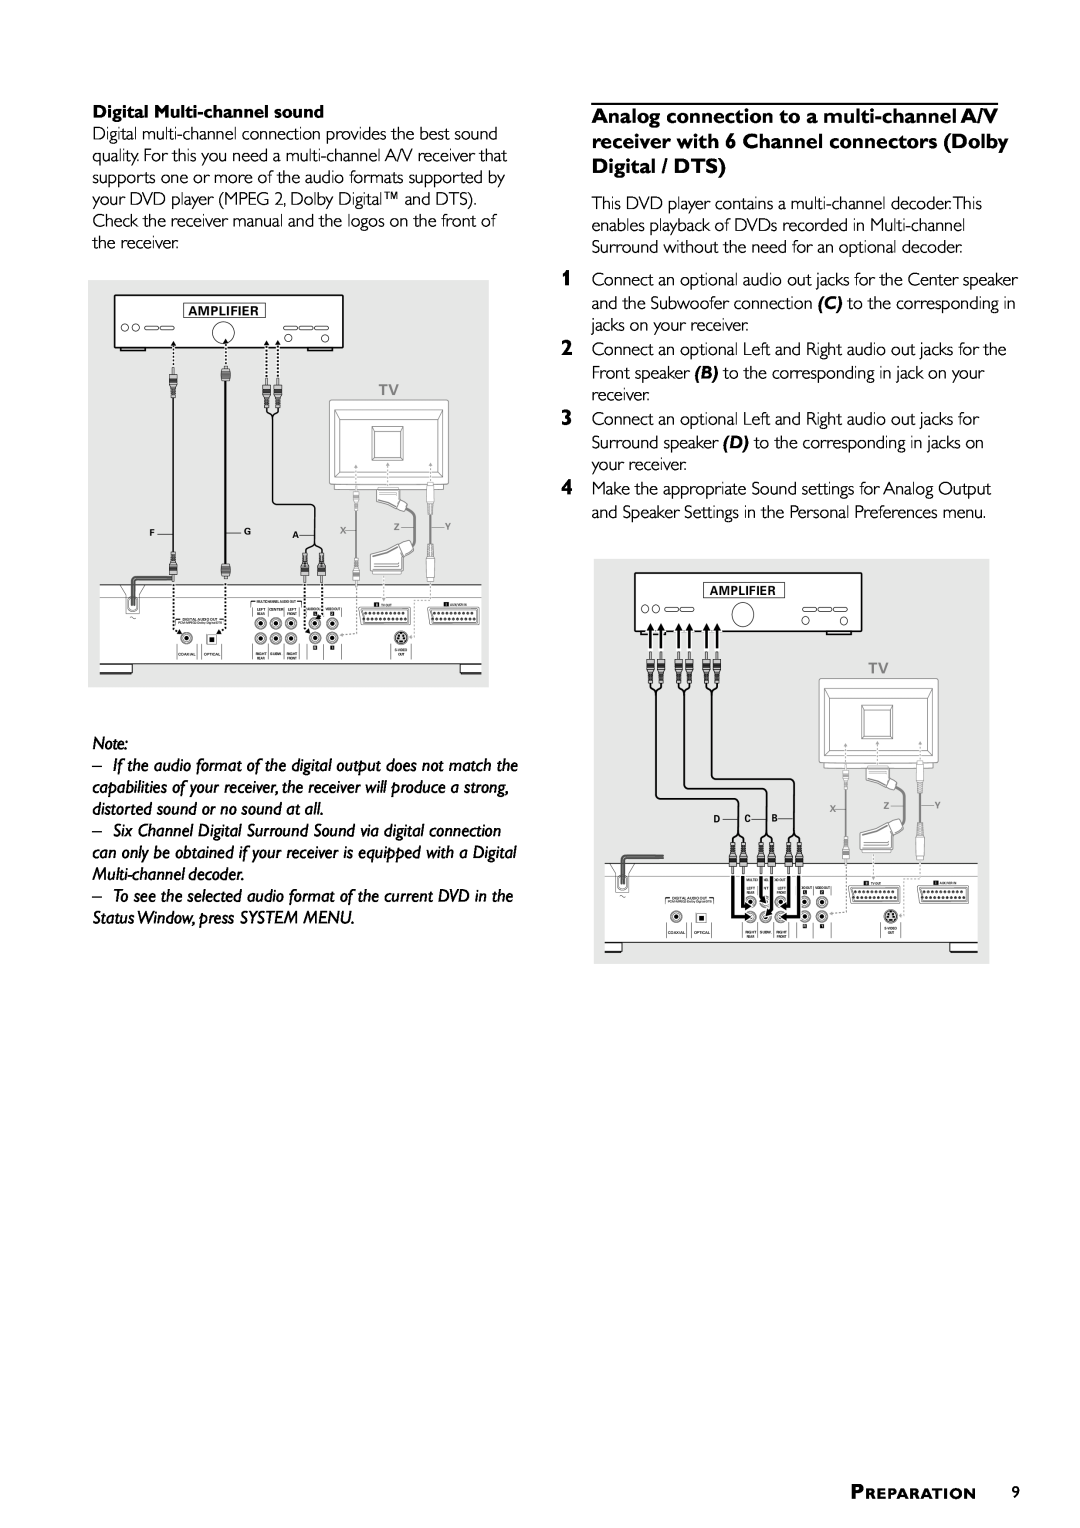 Philips DVD-762/051 manual Digital Multi-channel sound, Preparation 